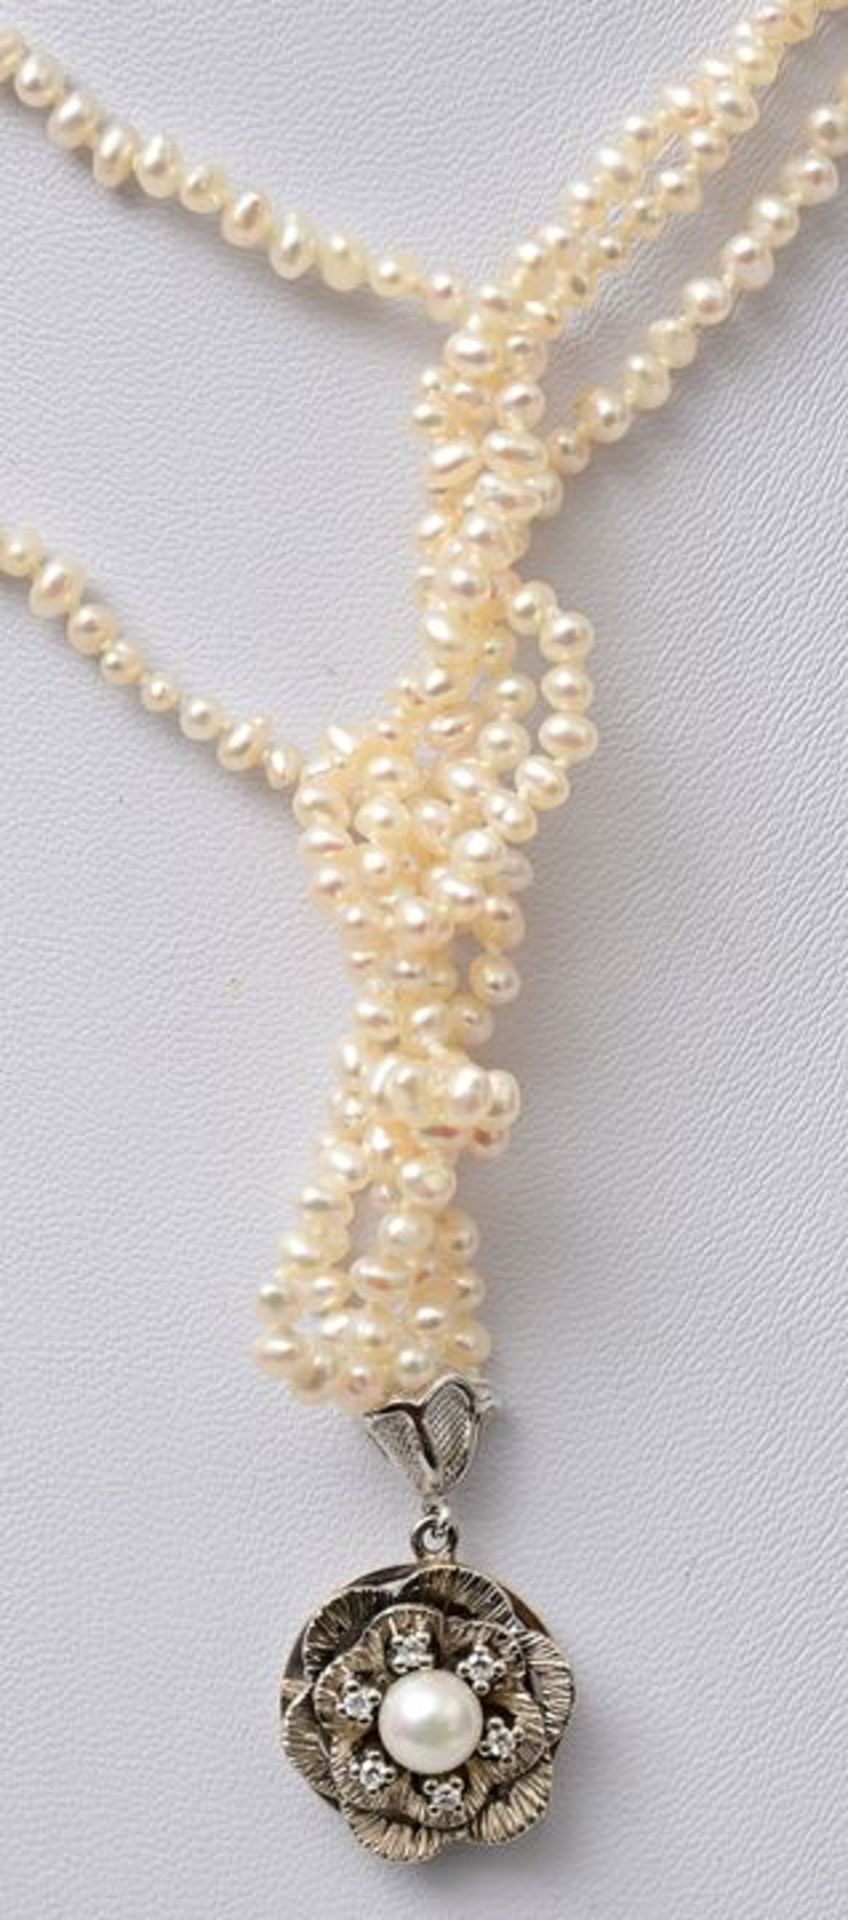 Saatperlenkette/ pearl necklace